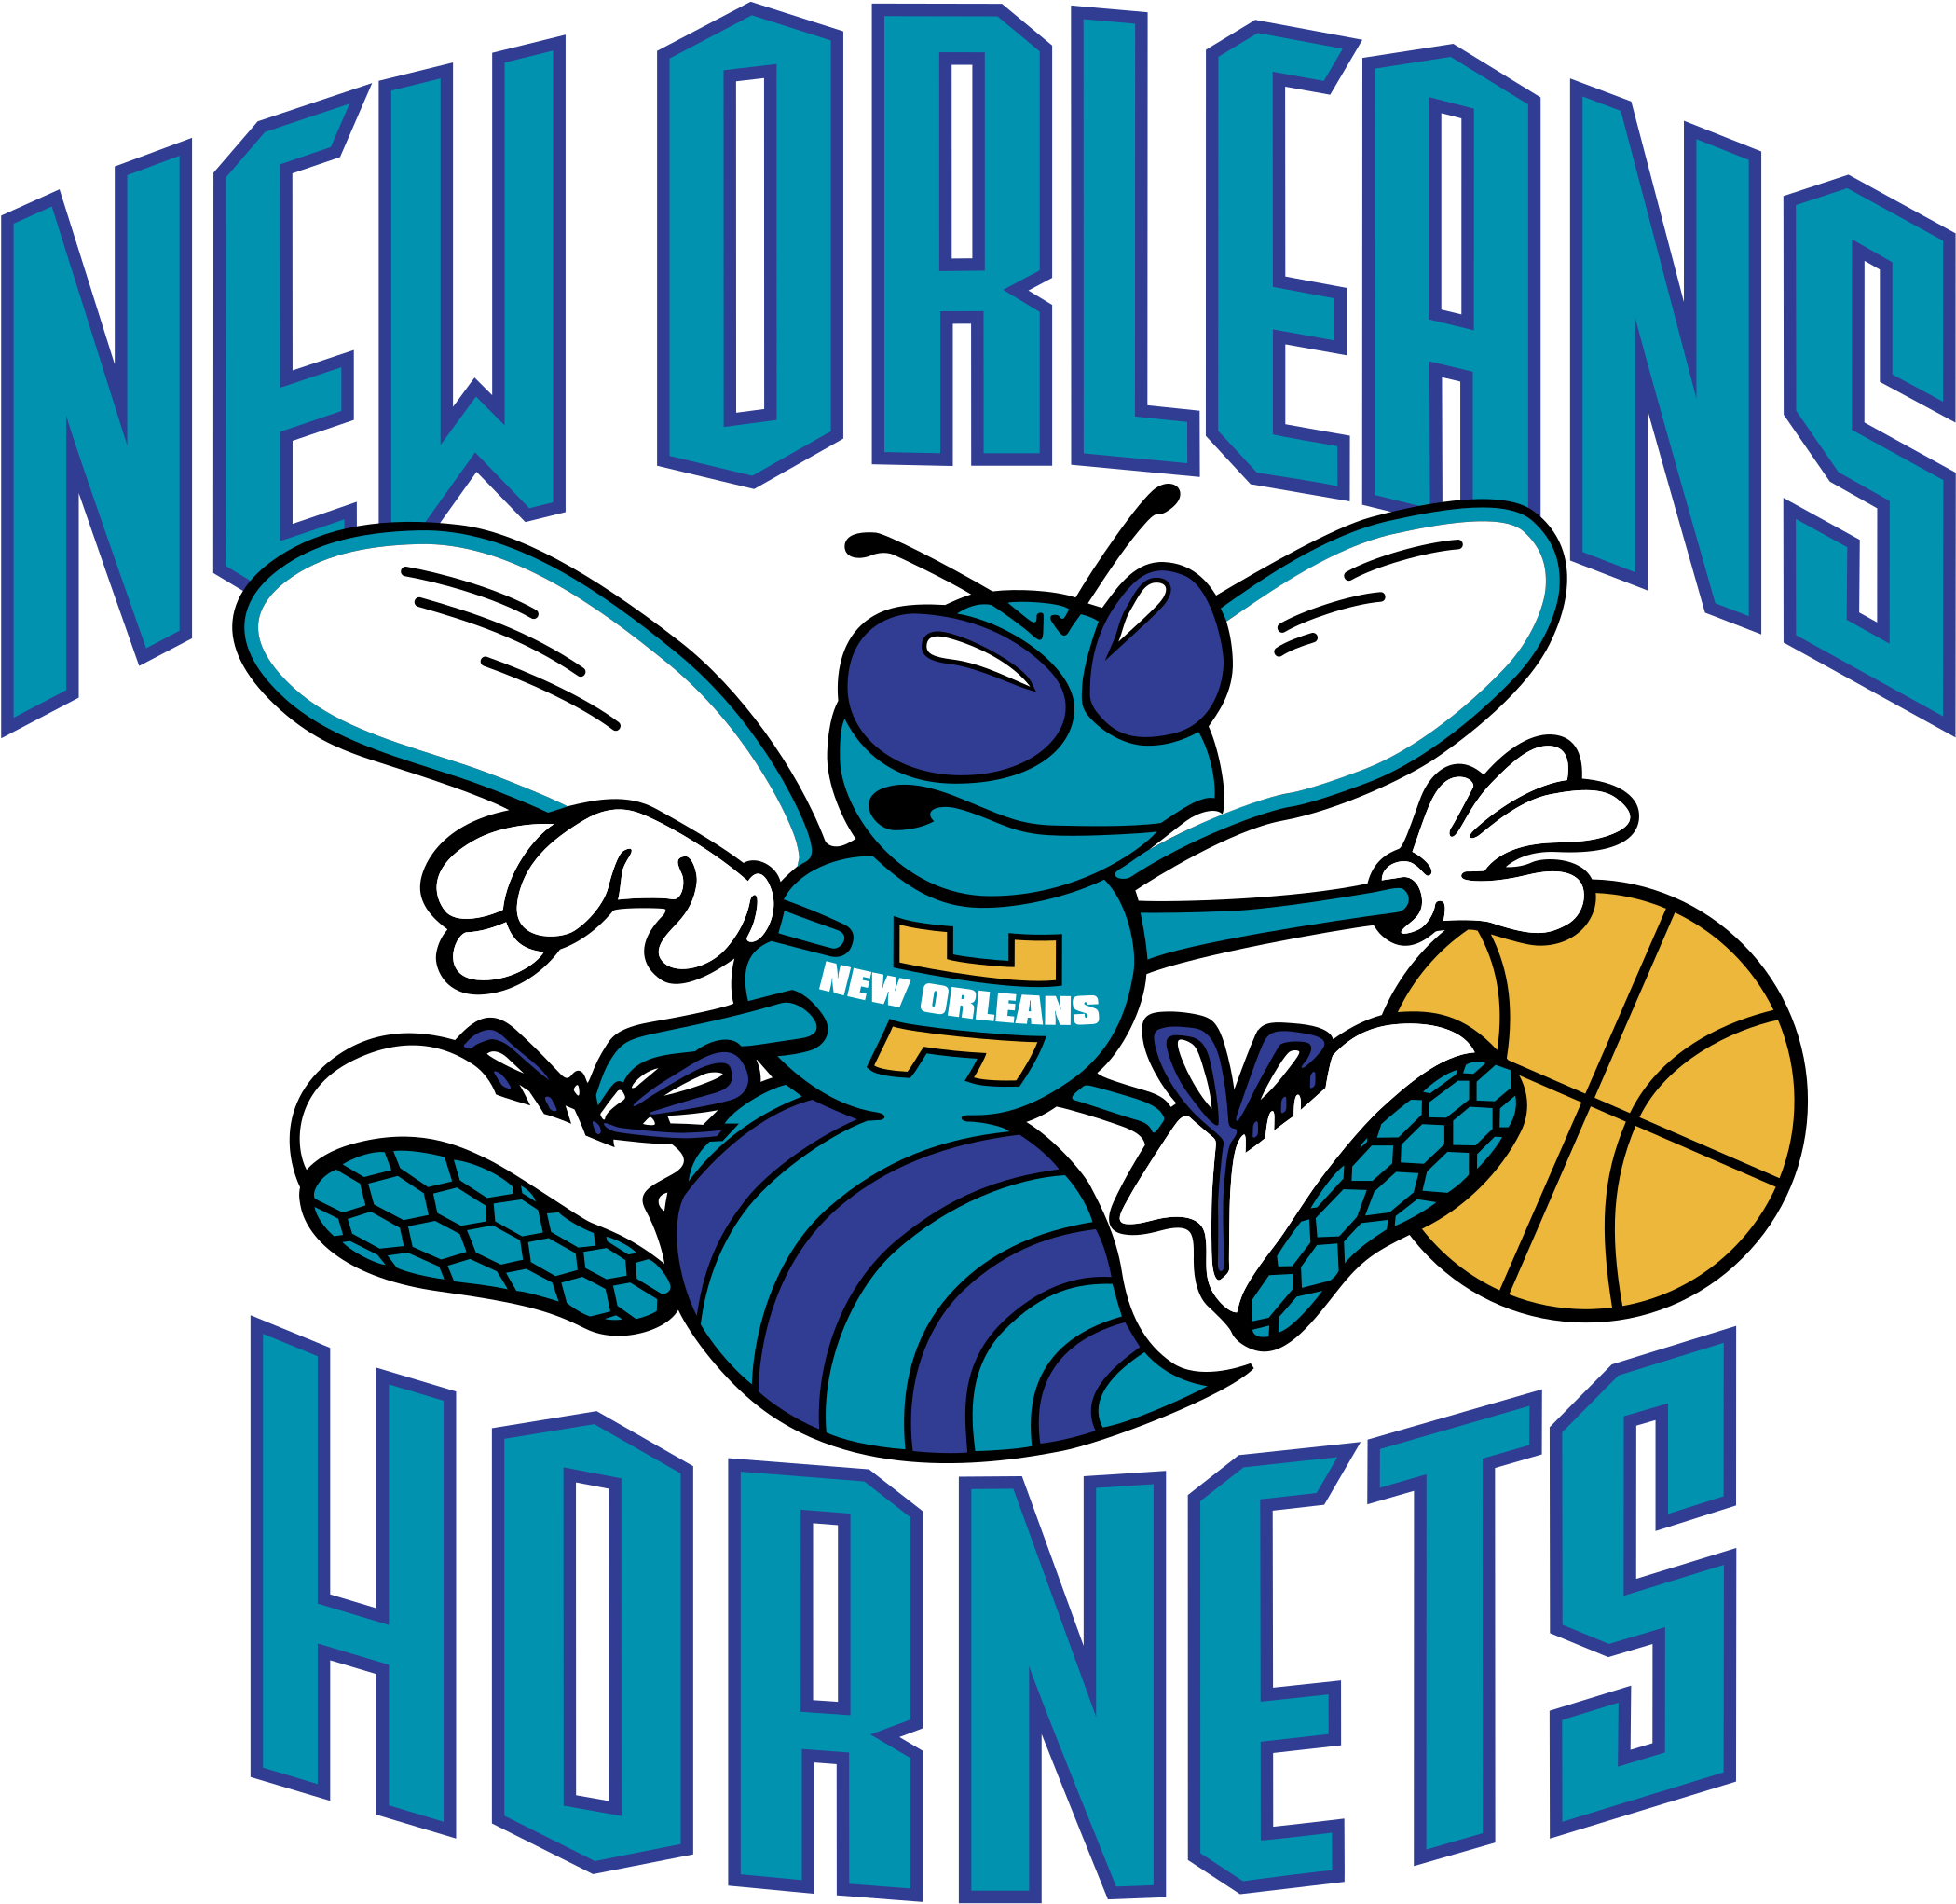 2400 X 2400 5 - New Orleans Hornets Logo (2400x2400)